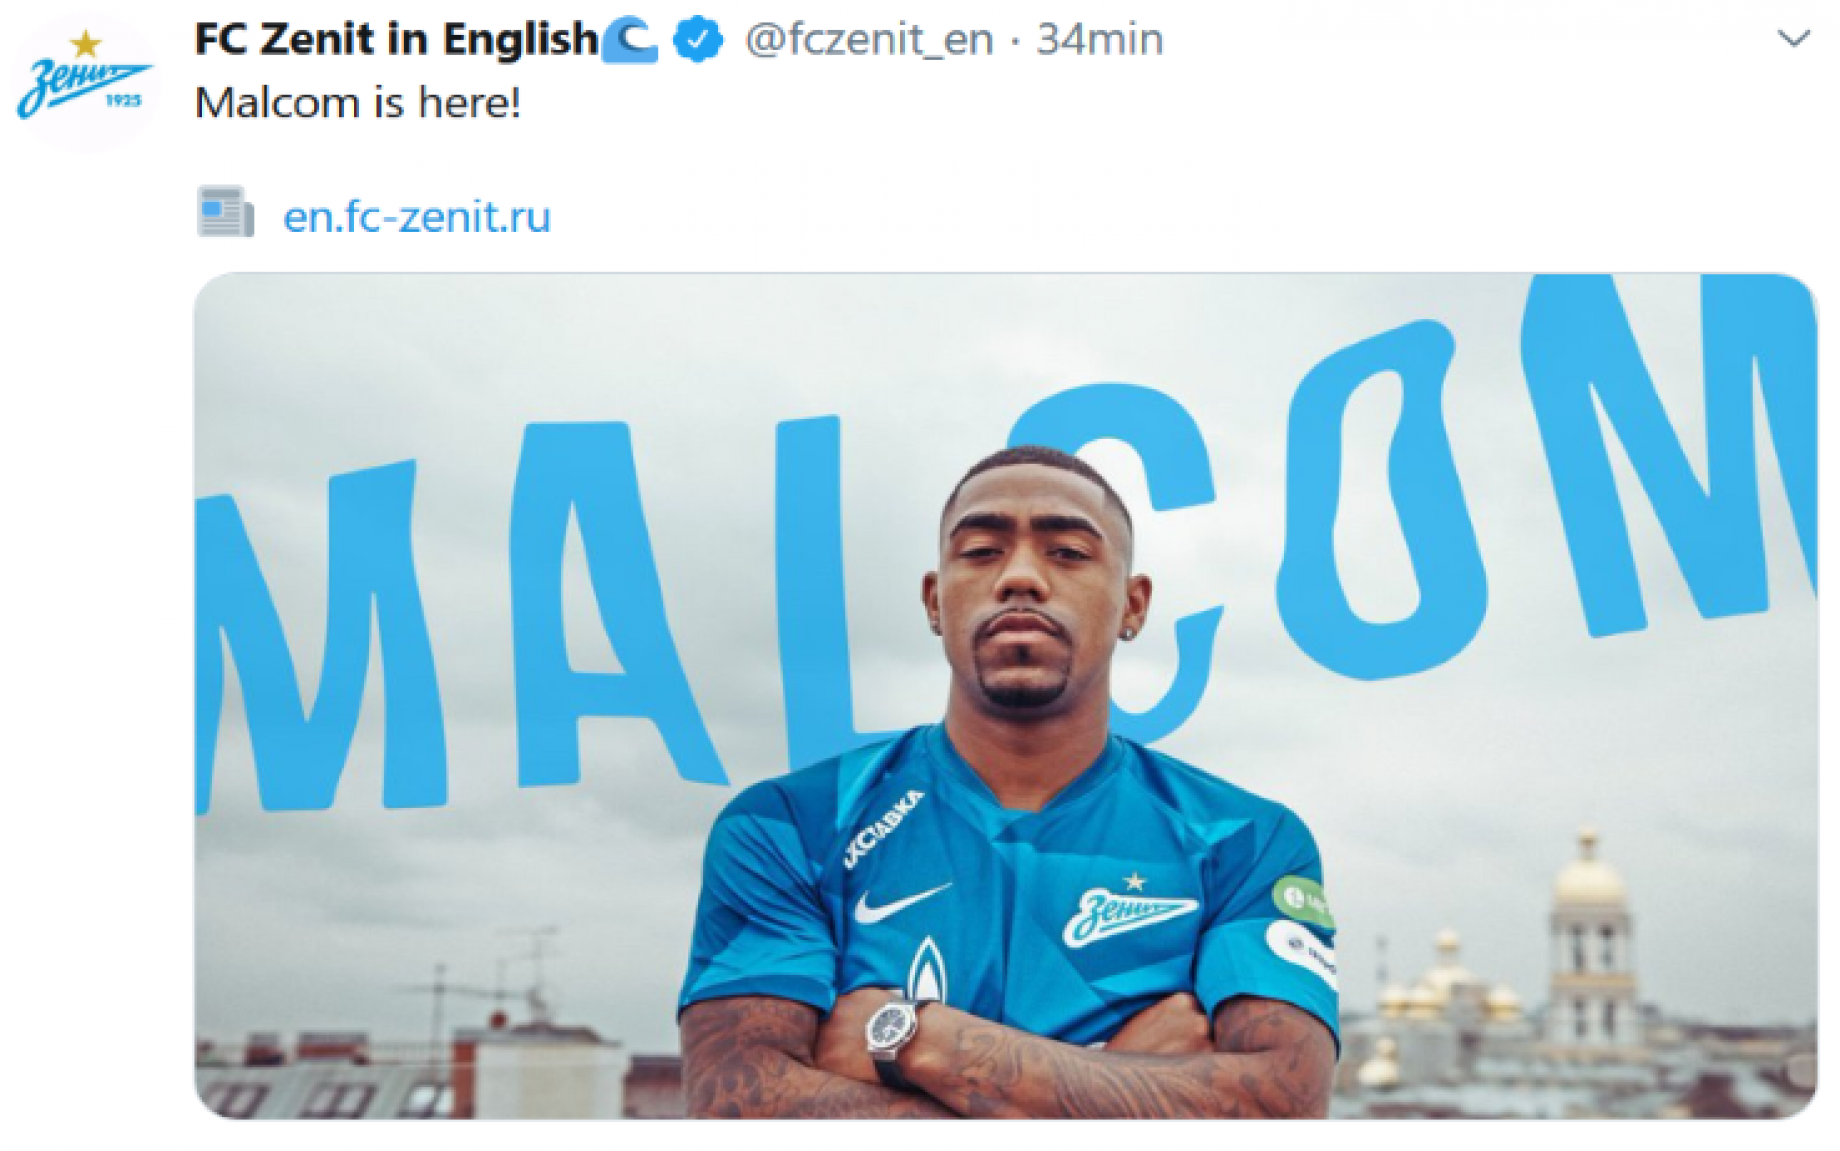 Malcom Zenit ufficiale SCREEN tw.png